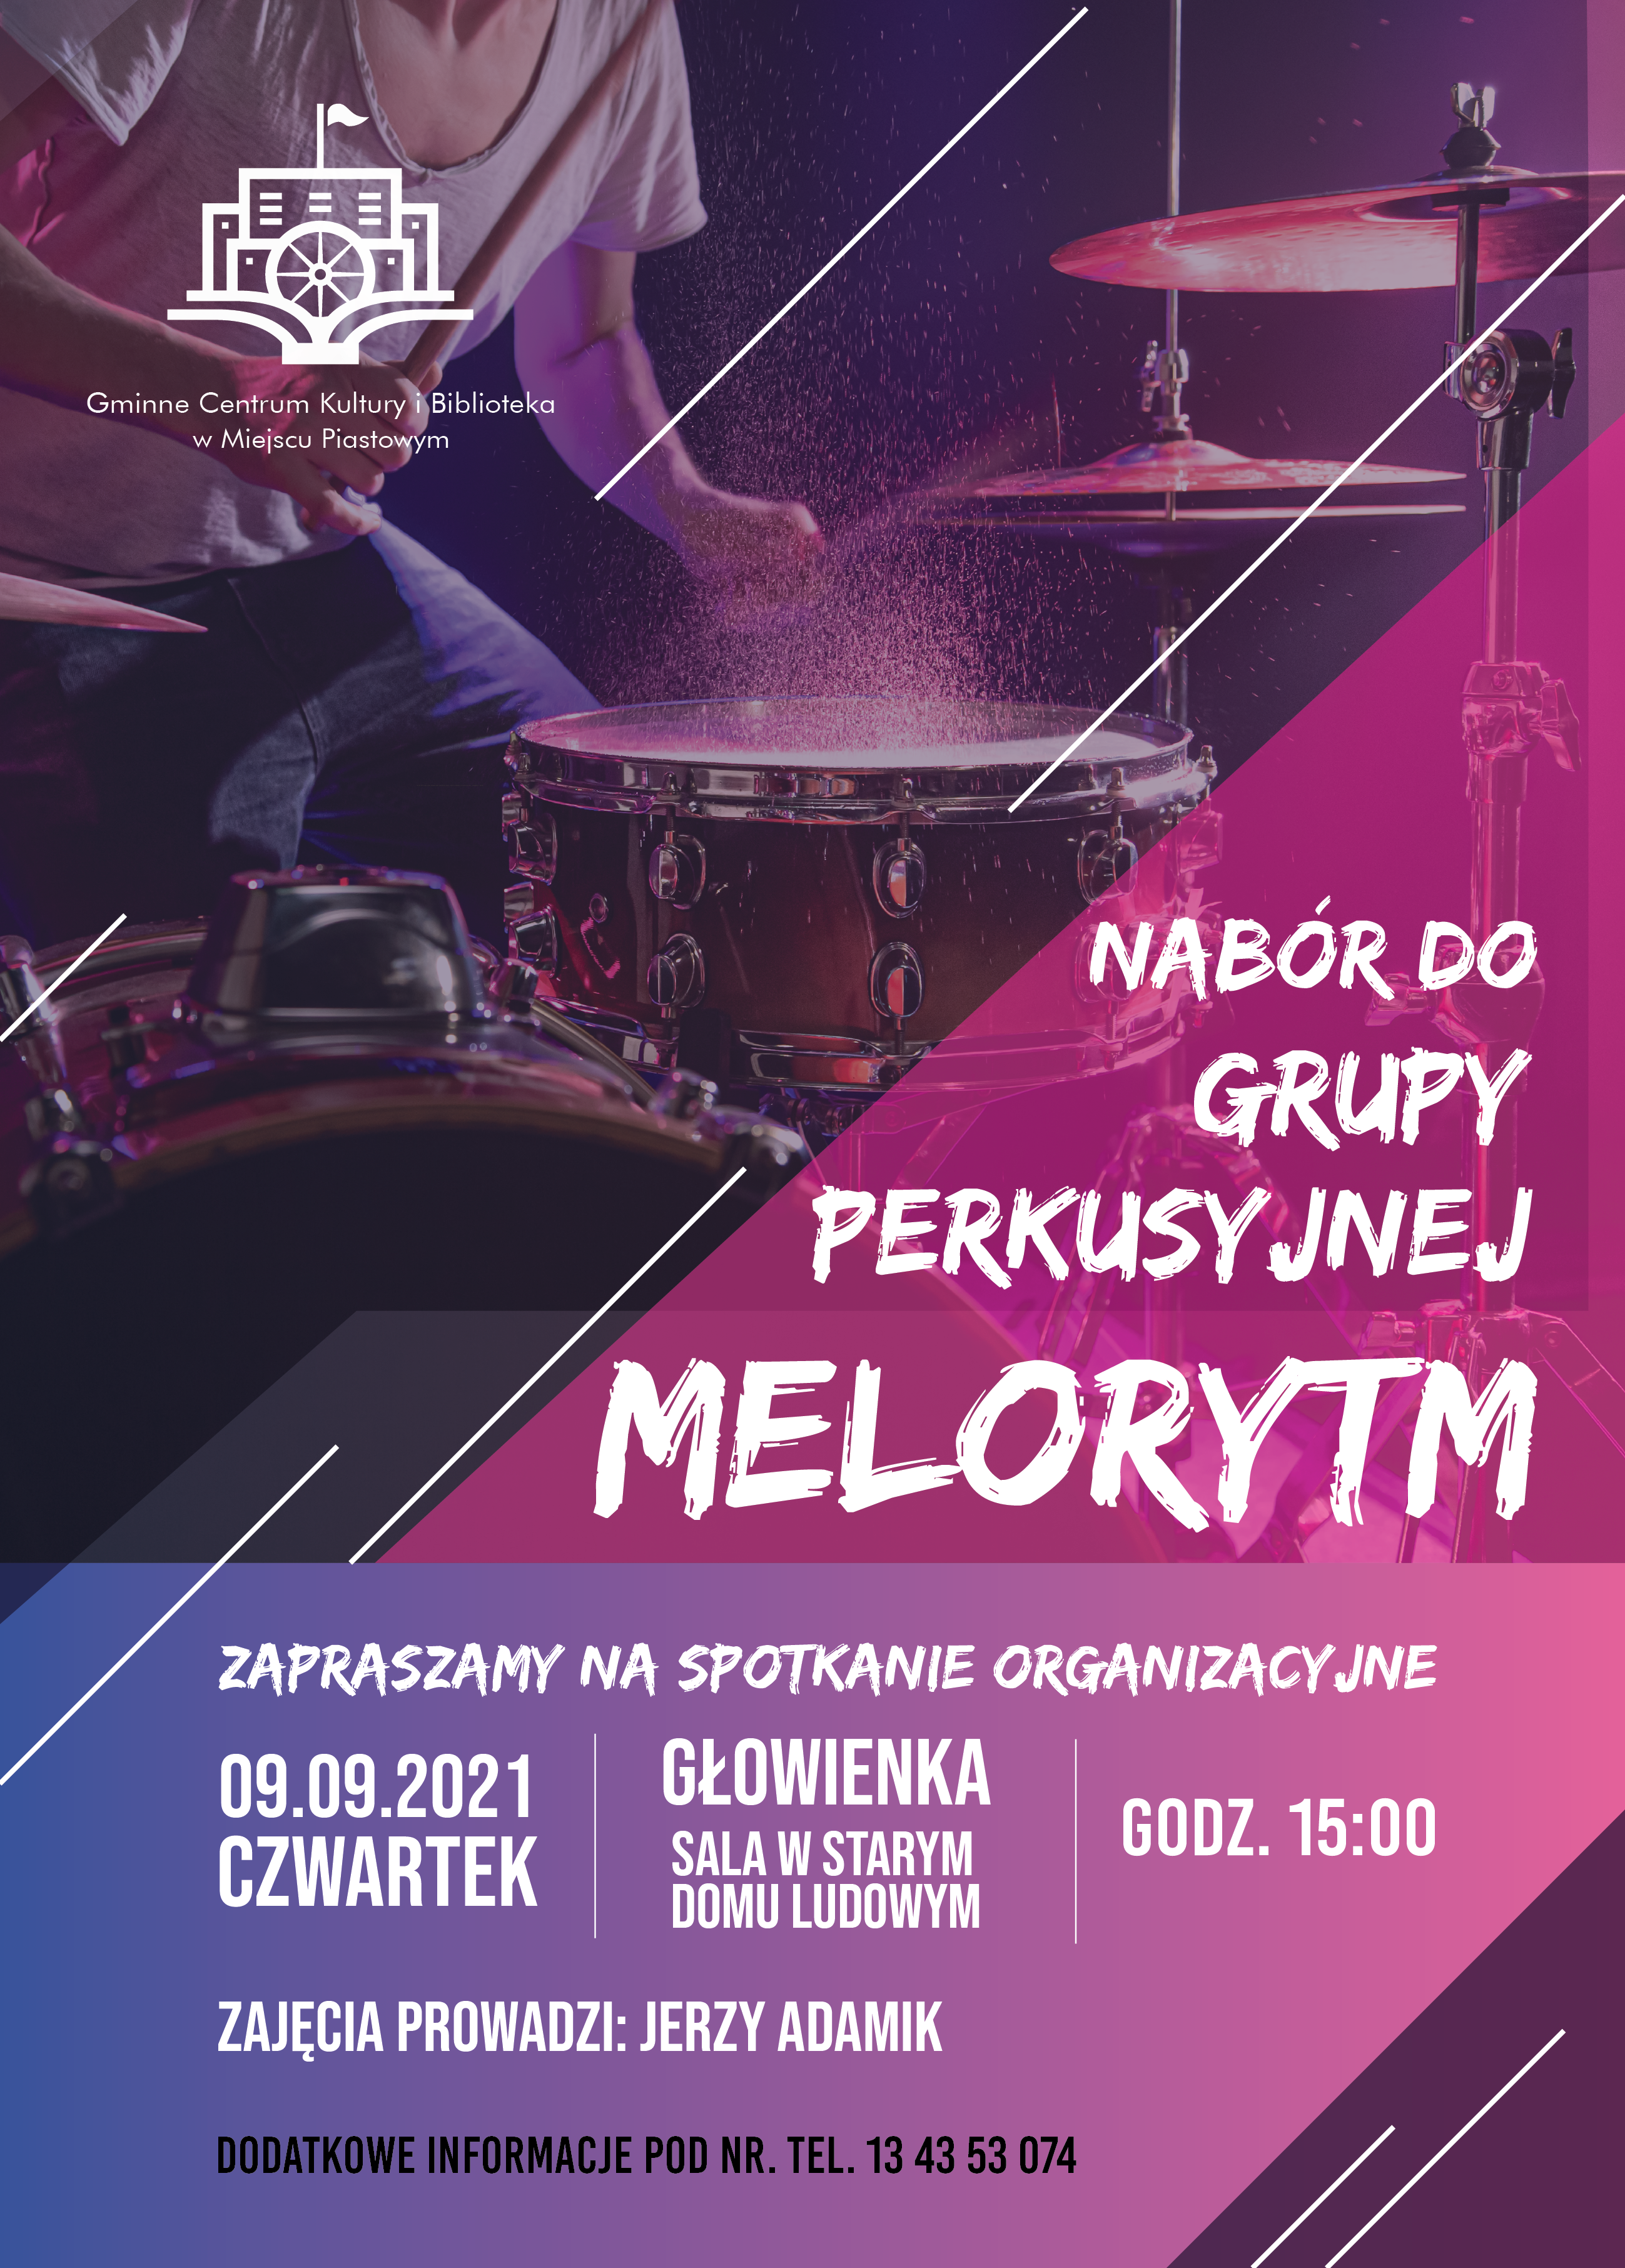 You are currently viewing Nabór do grupy perkusyjnej MELORYTM